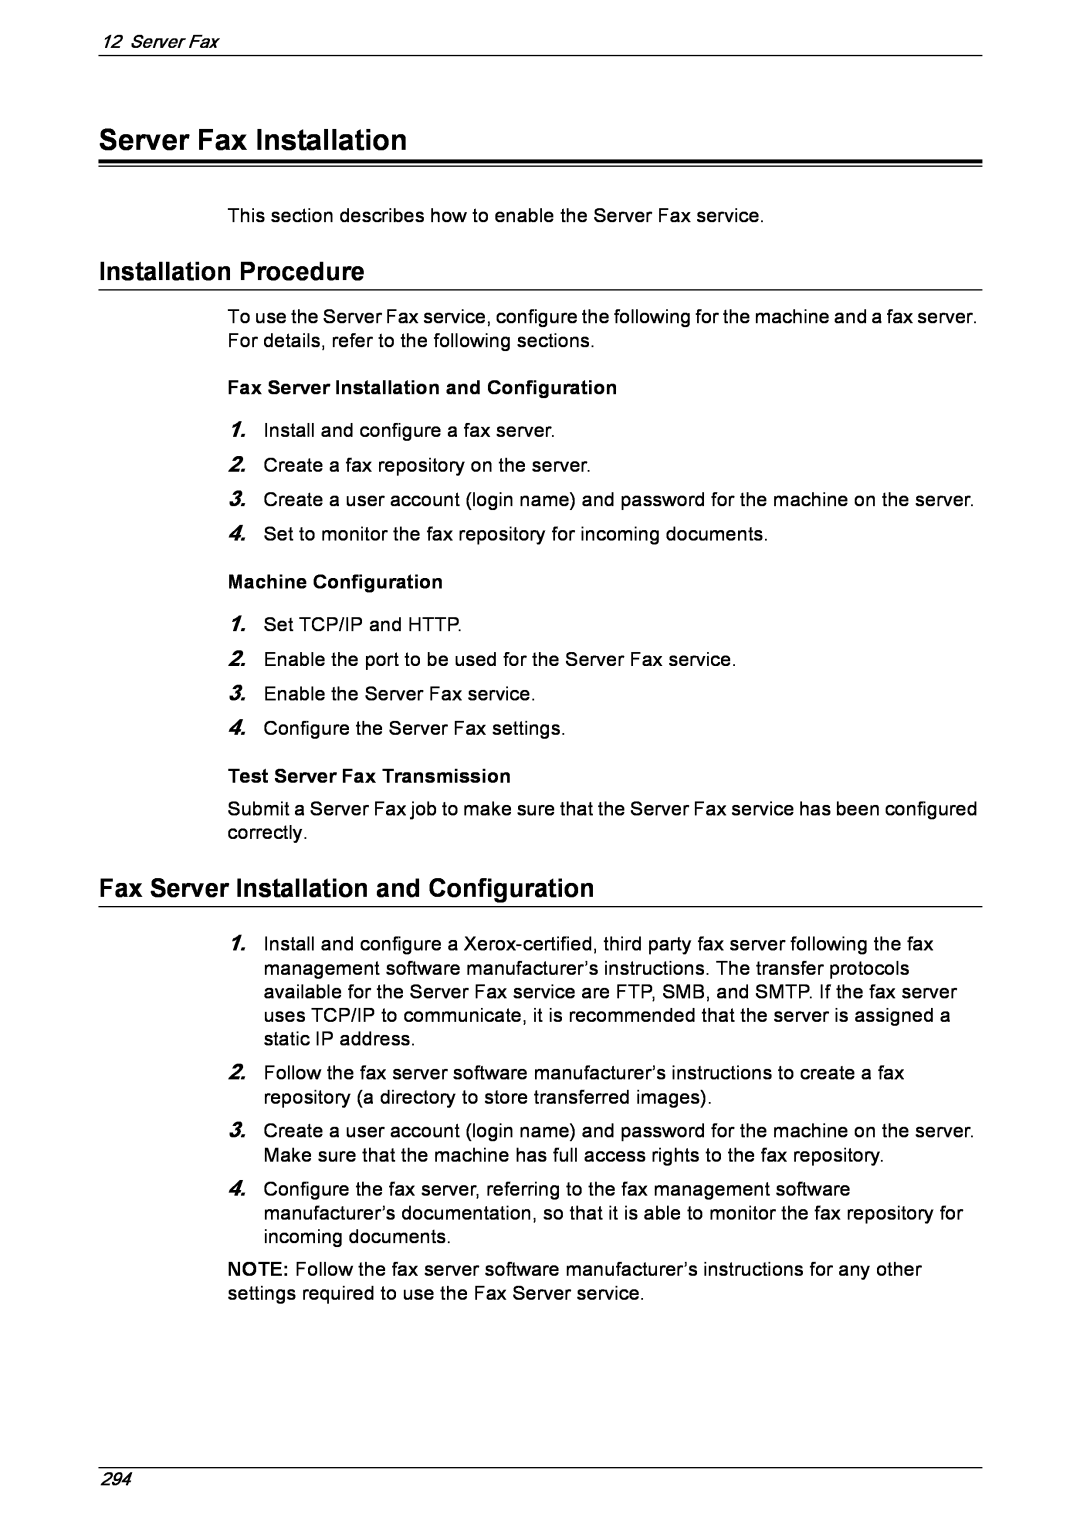 Xerox 5222 manual Server Fax Installation, Fax Server Installation and Configuration, Installation Procedure 